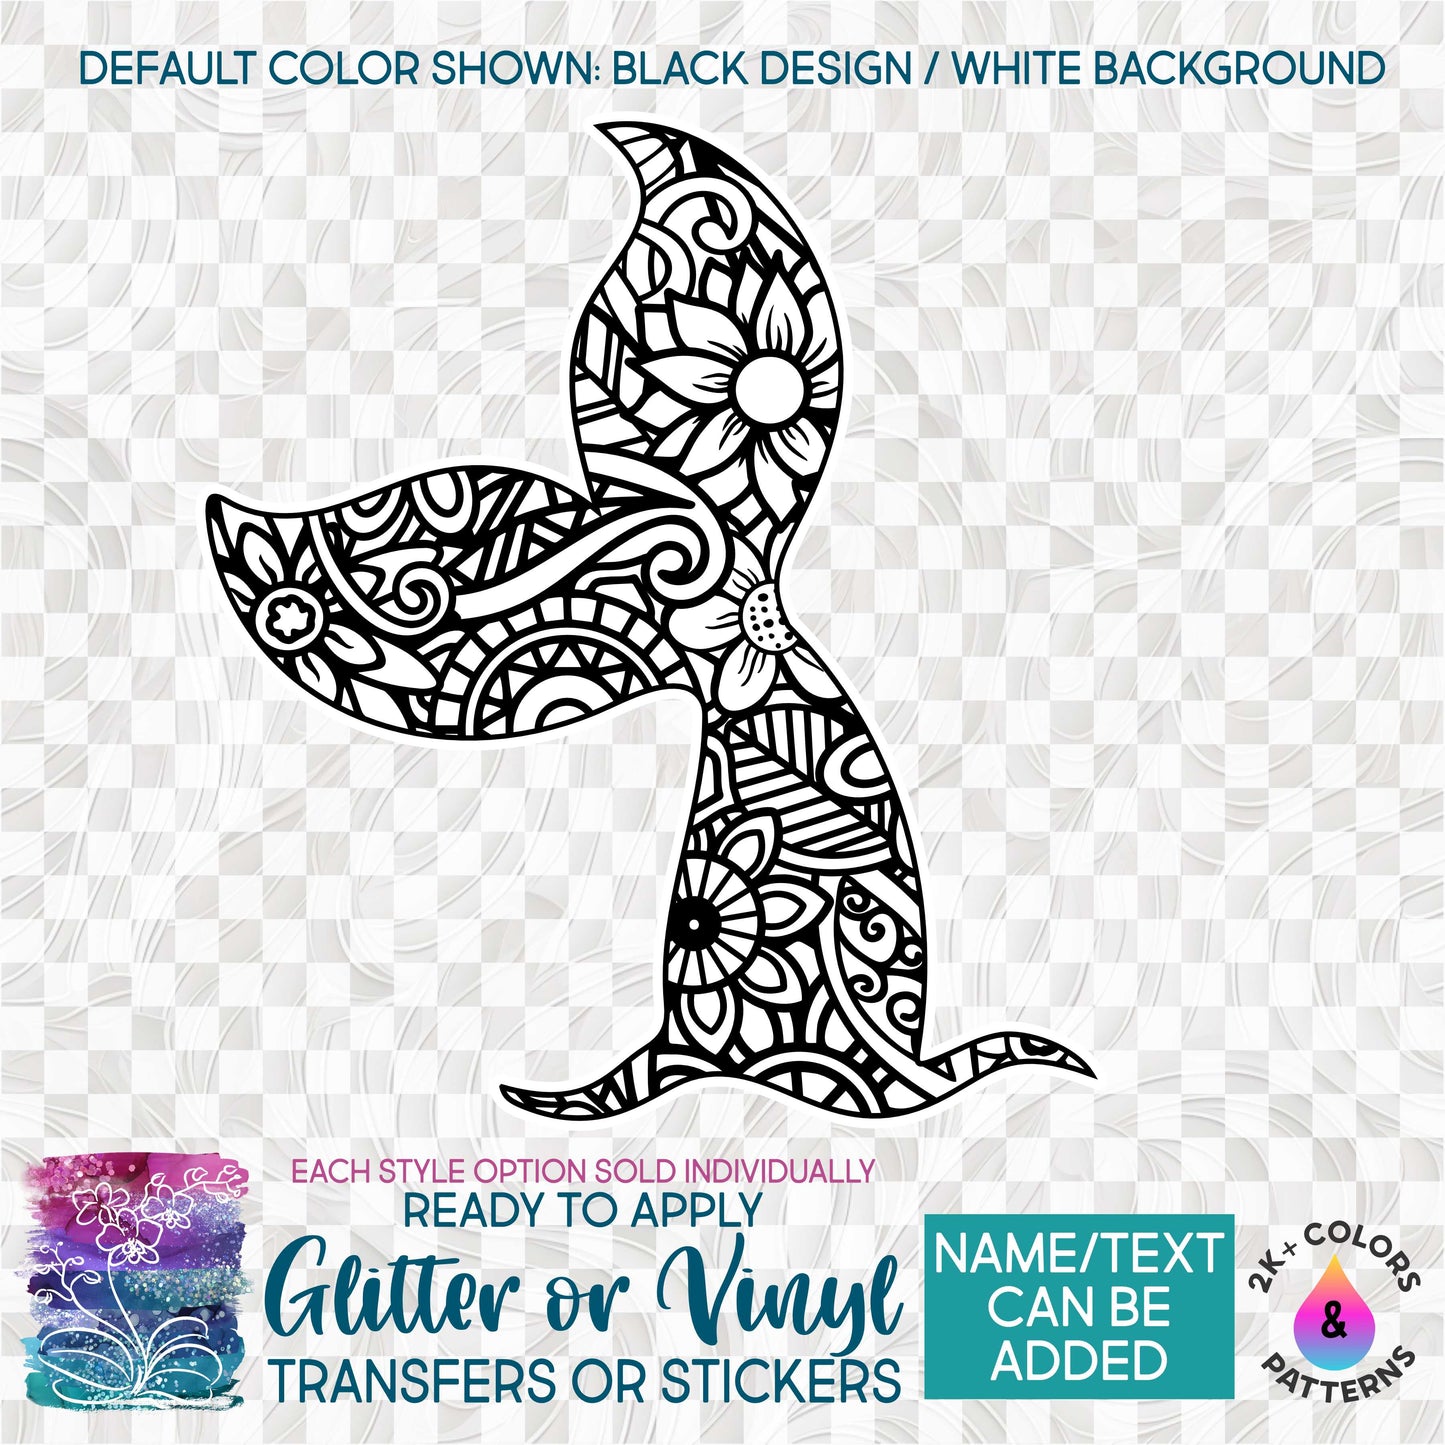 (s011-D5) Mermaid Tail Zentangle Mandala Floral Doodle Glitter or Vinyl Iron-On Transfer or Sticker